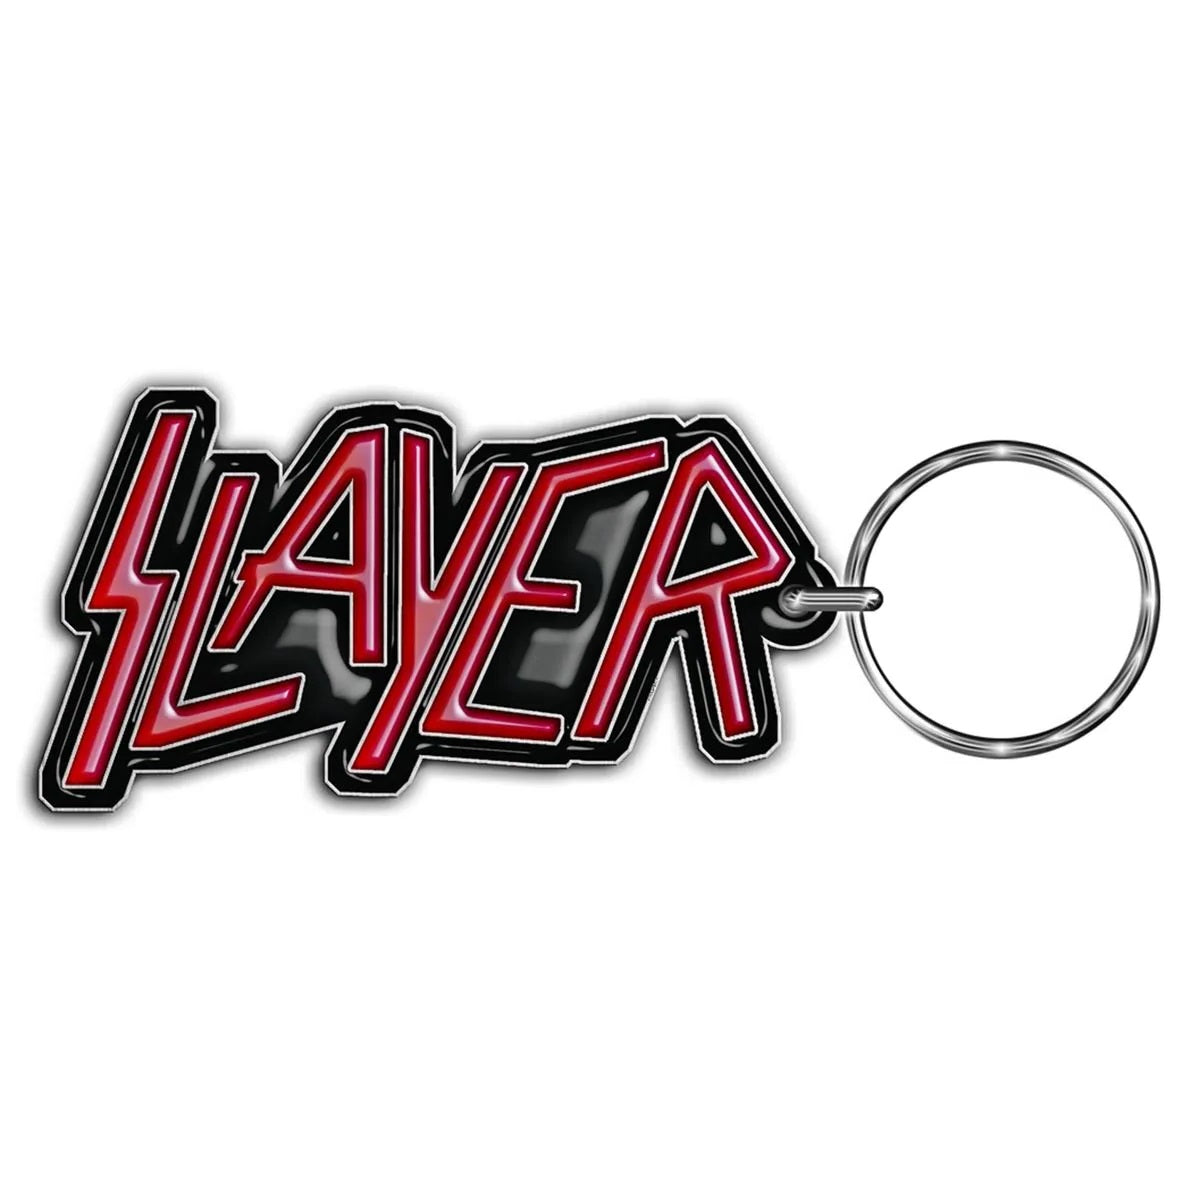 Slayer - Logo, Key Chain